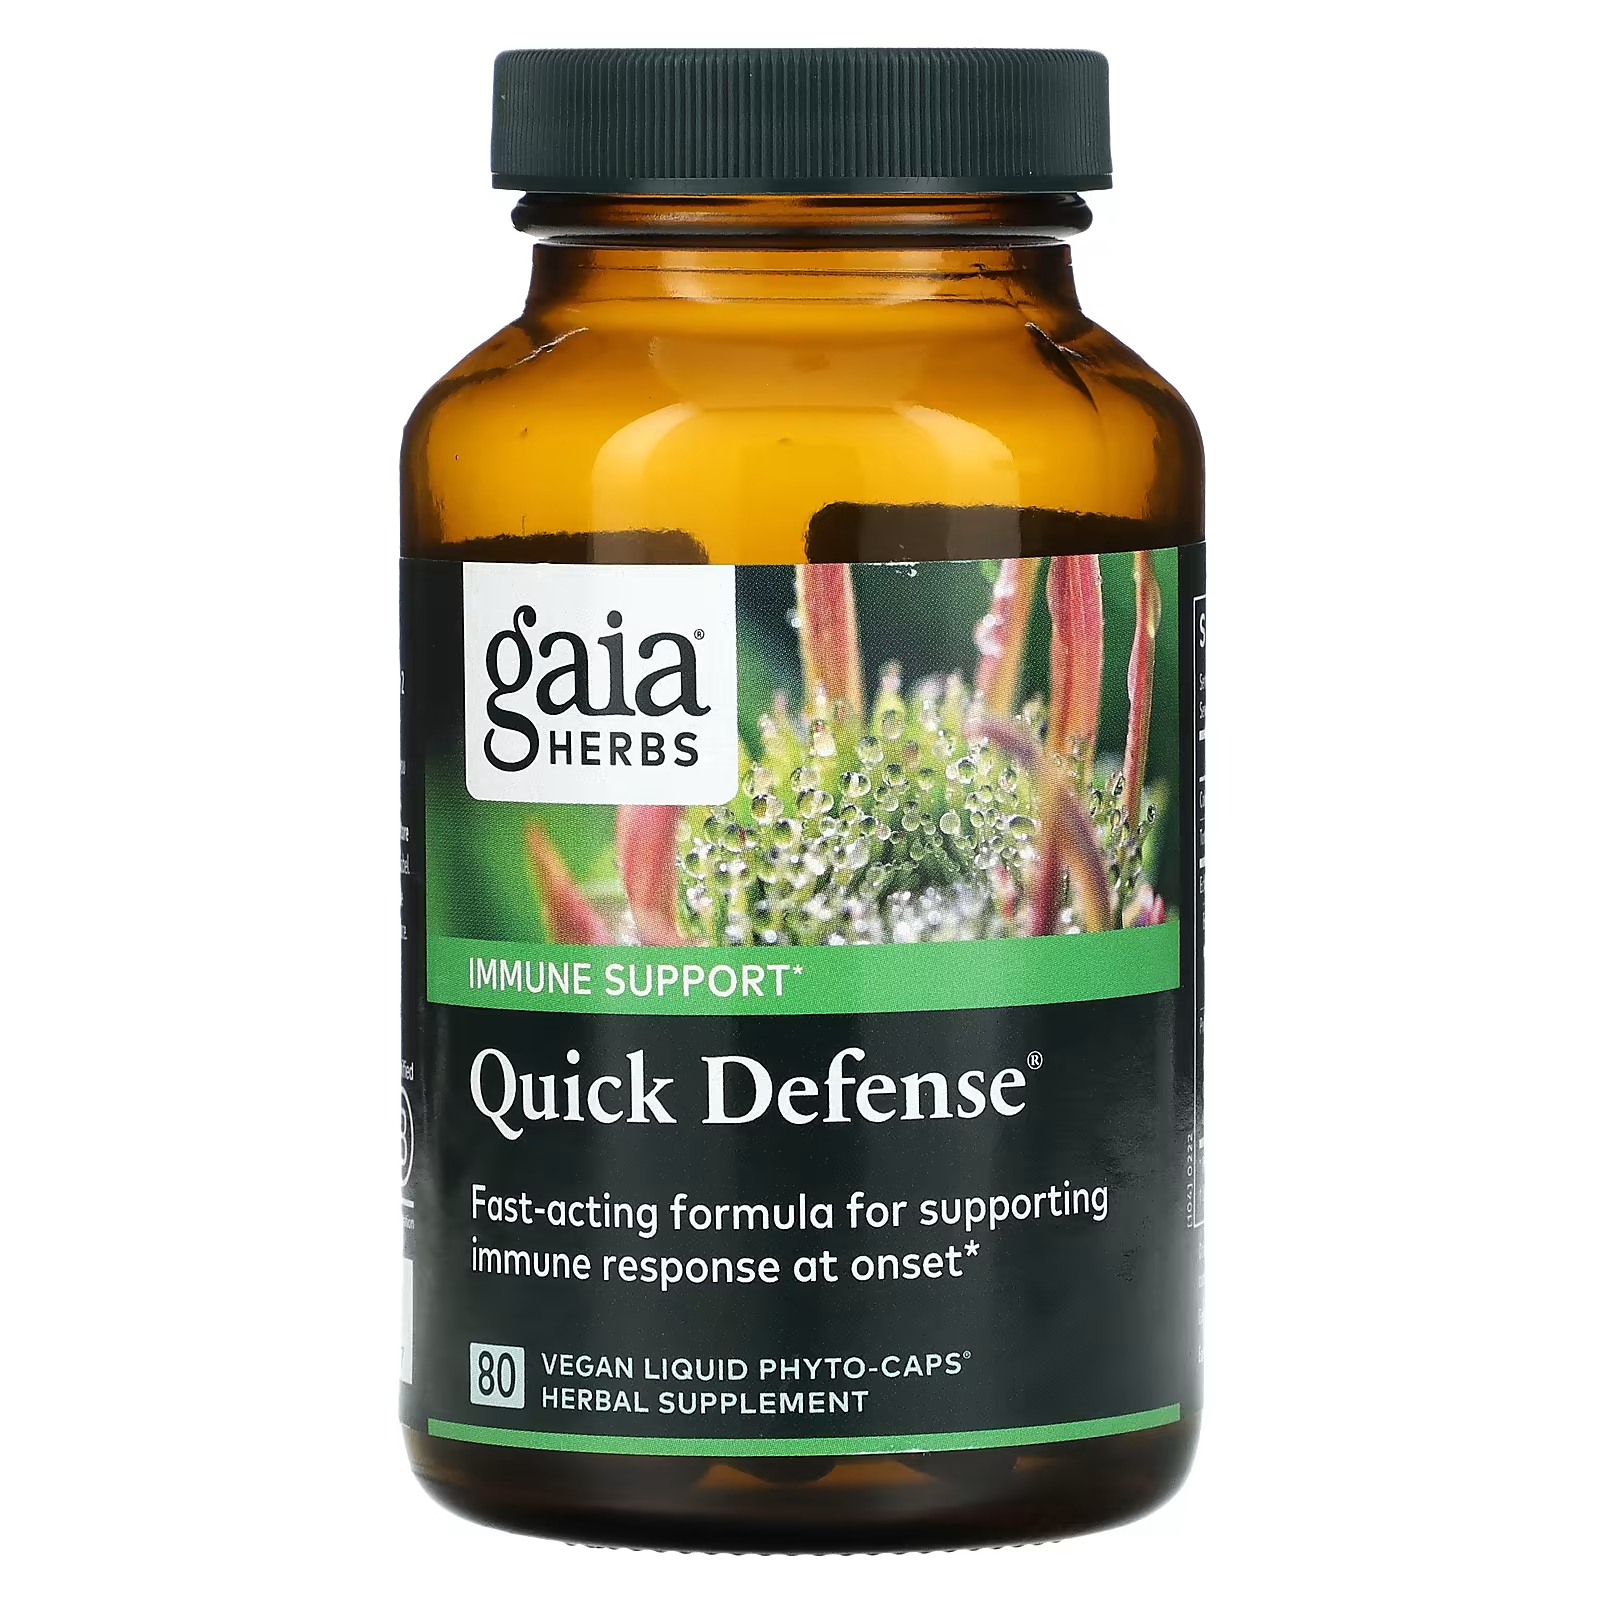 Пищевая добавка Gaia Herbs Quick Defense, 80 веганских жидких фито-капсул gaia herbs ginger supreme 60 веганских жидких фито капсул